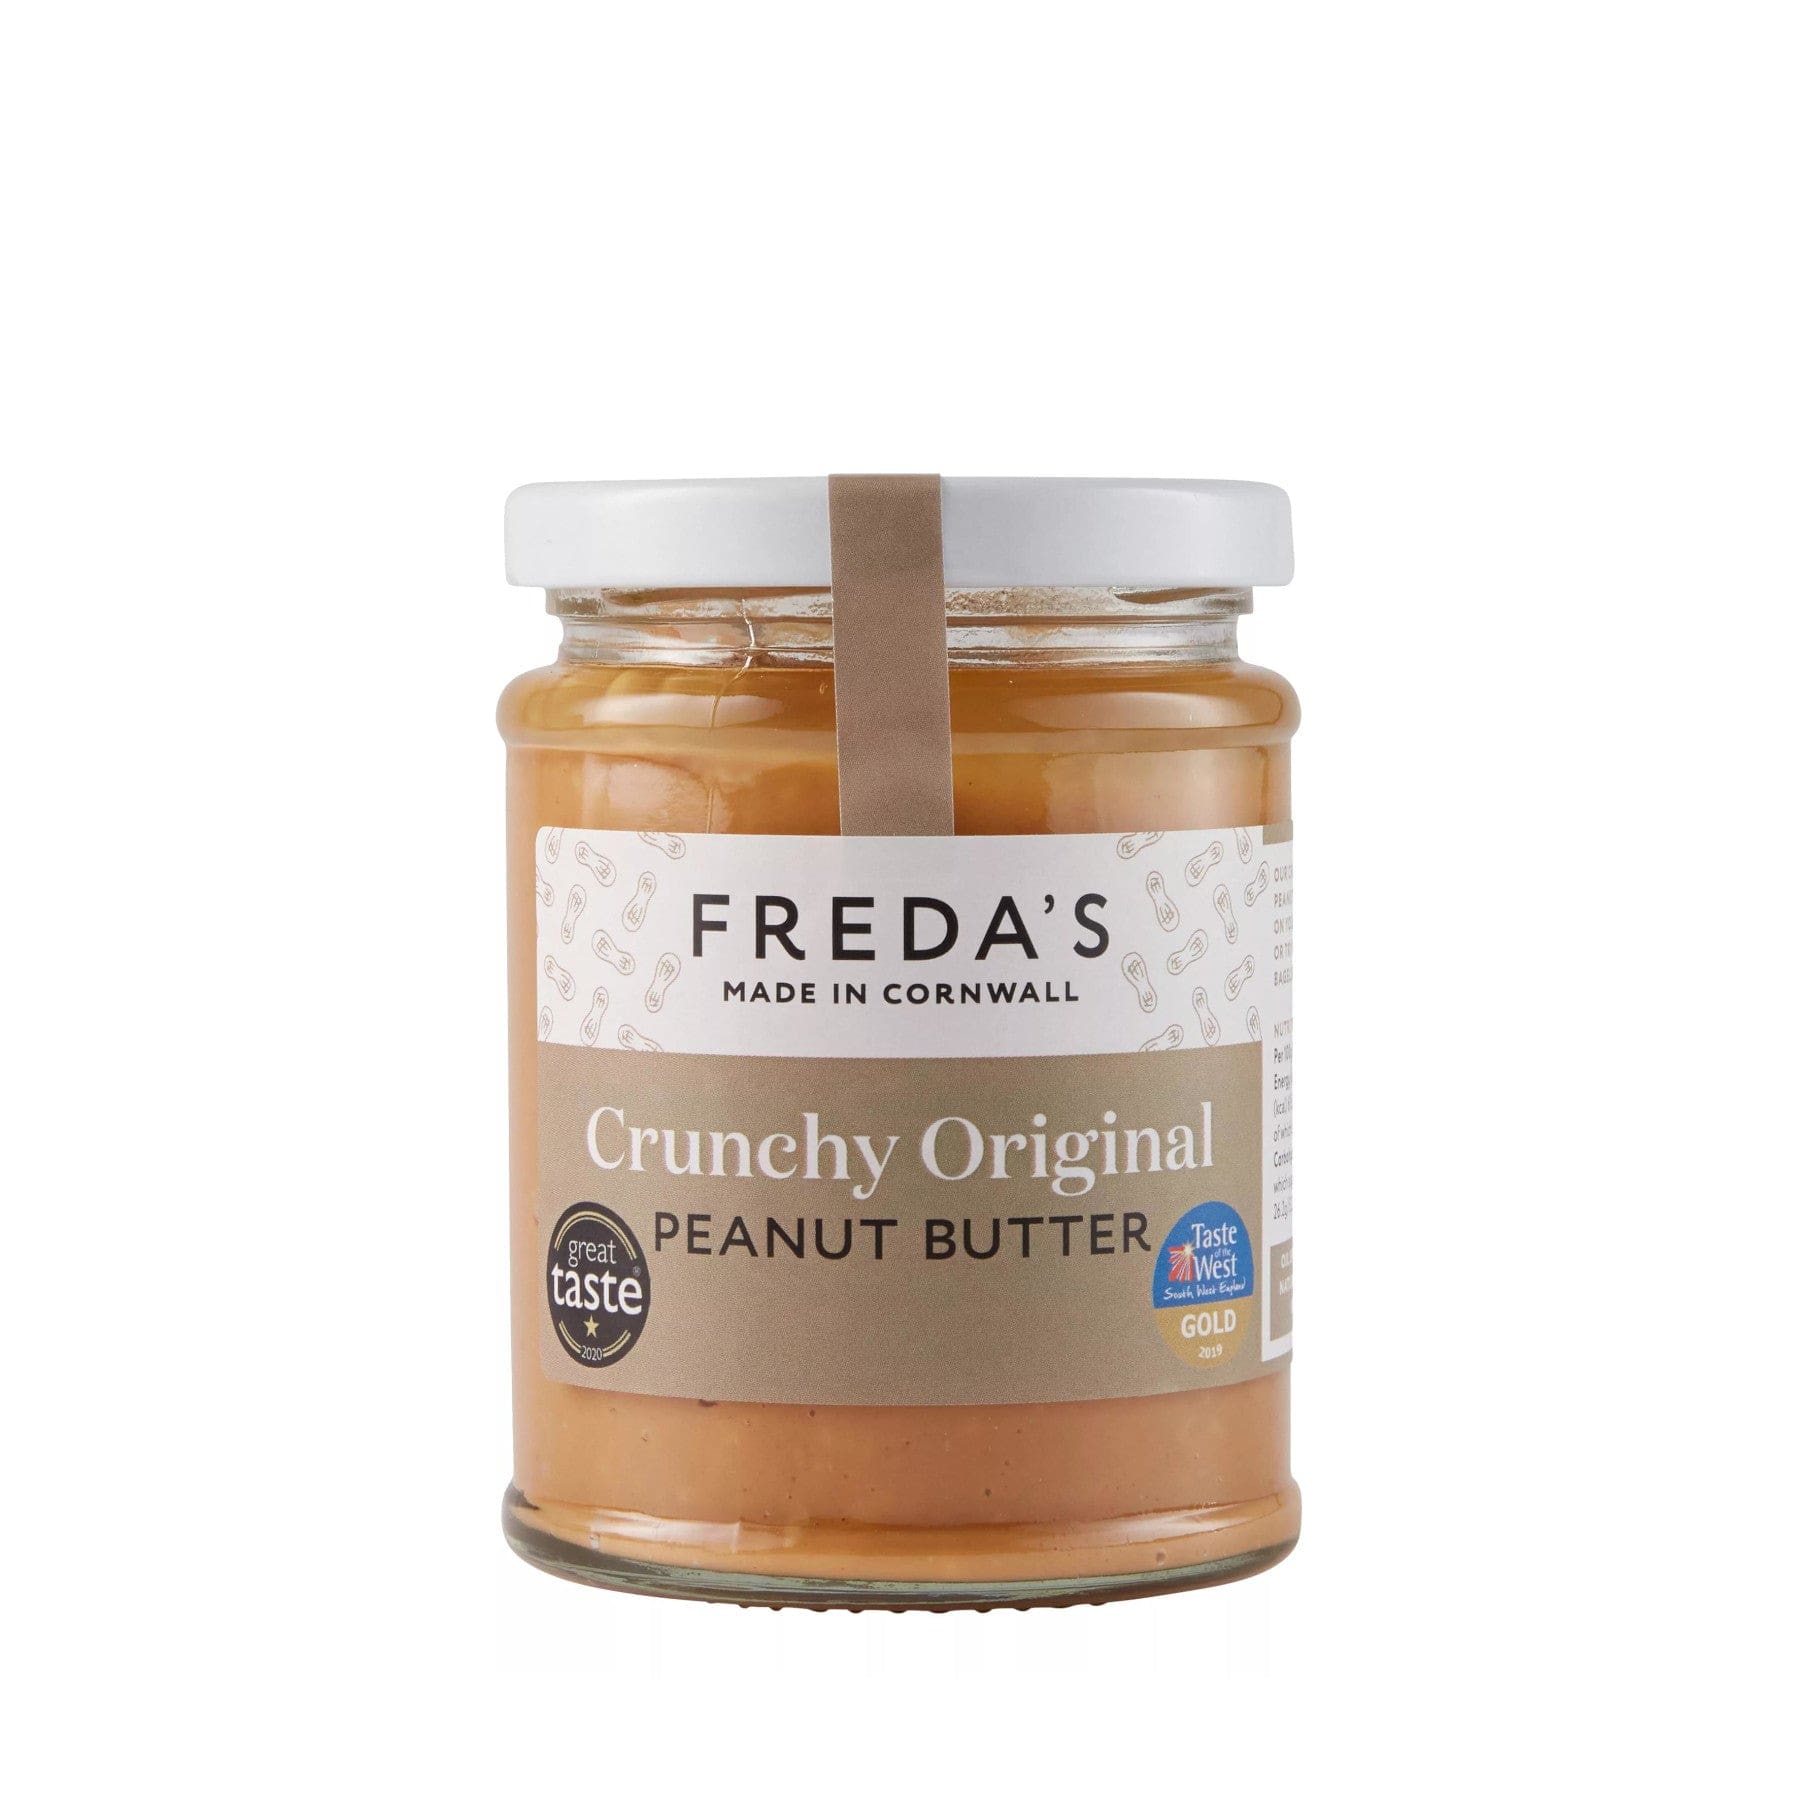 Freda's Crunchy Original Peanut Butter jar, Cornwall-made, award-winning, natural, nut spread on white background.